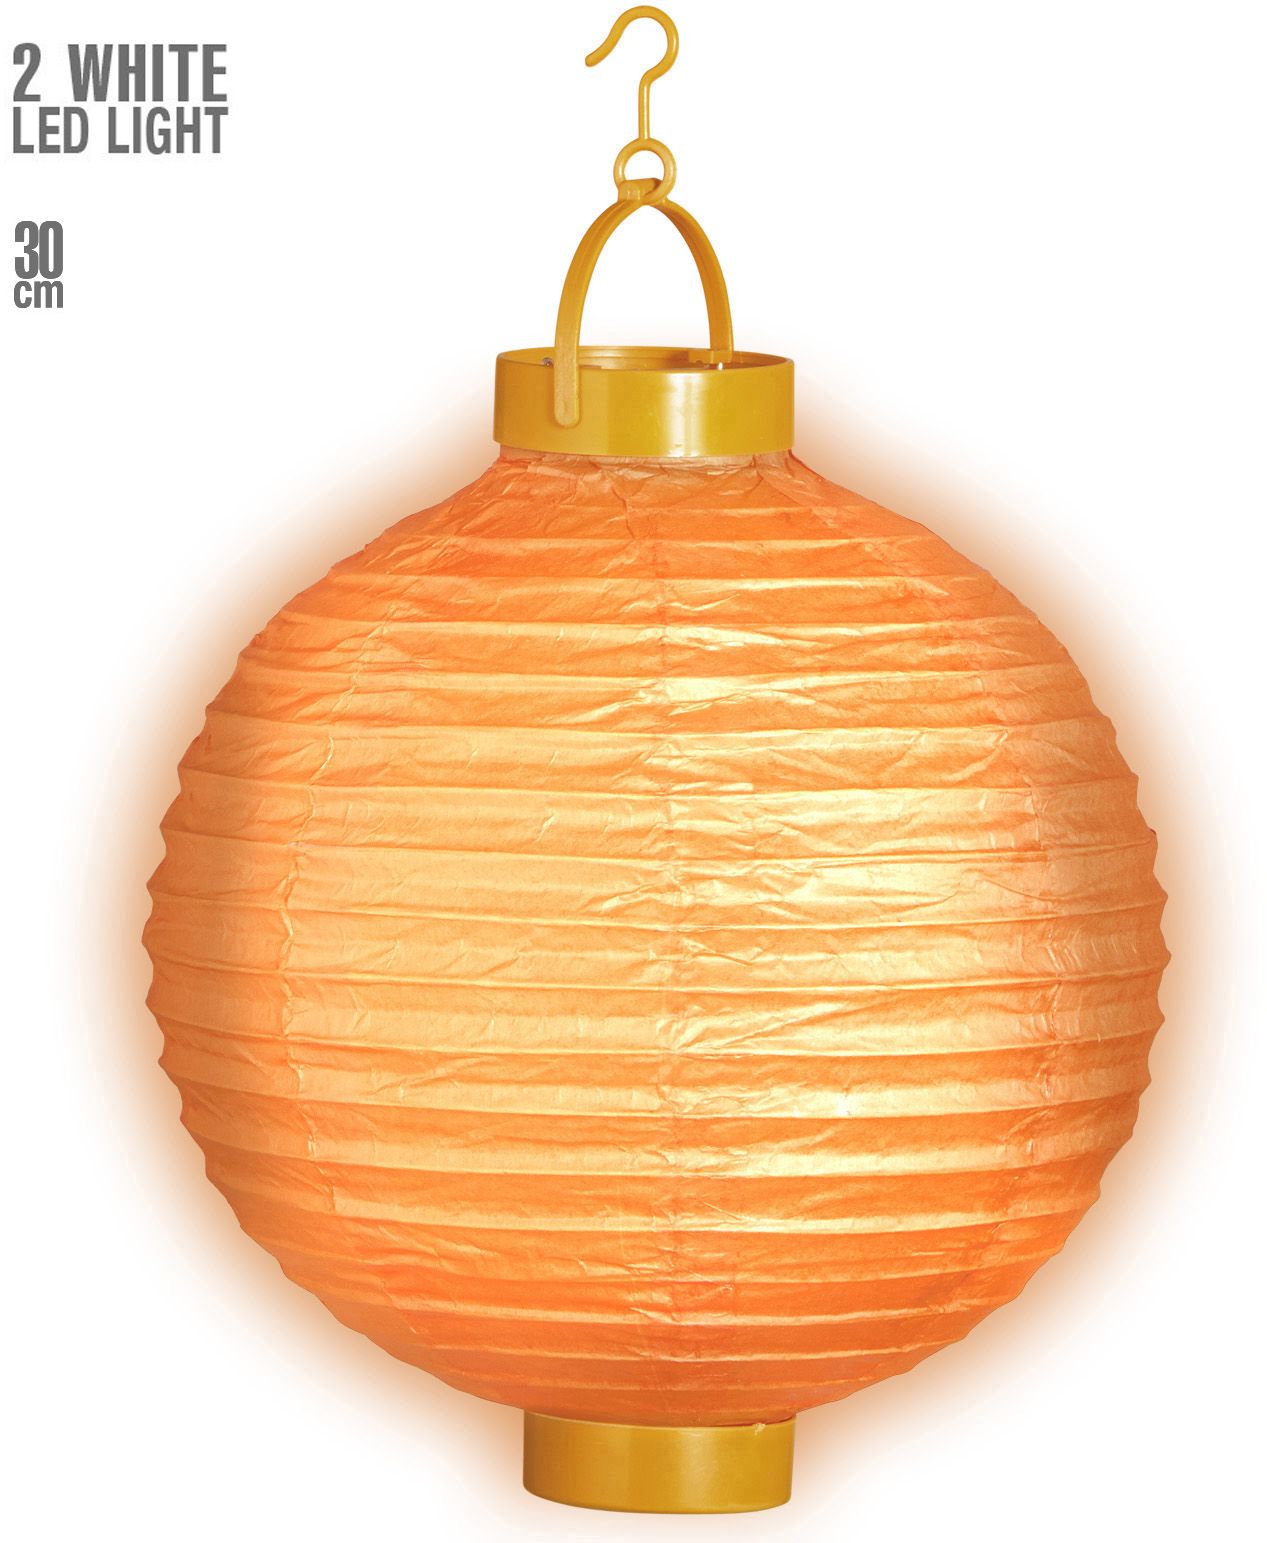 Oranje lantaarn met 2 witte LED lichten